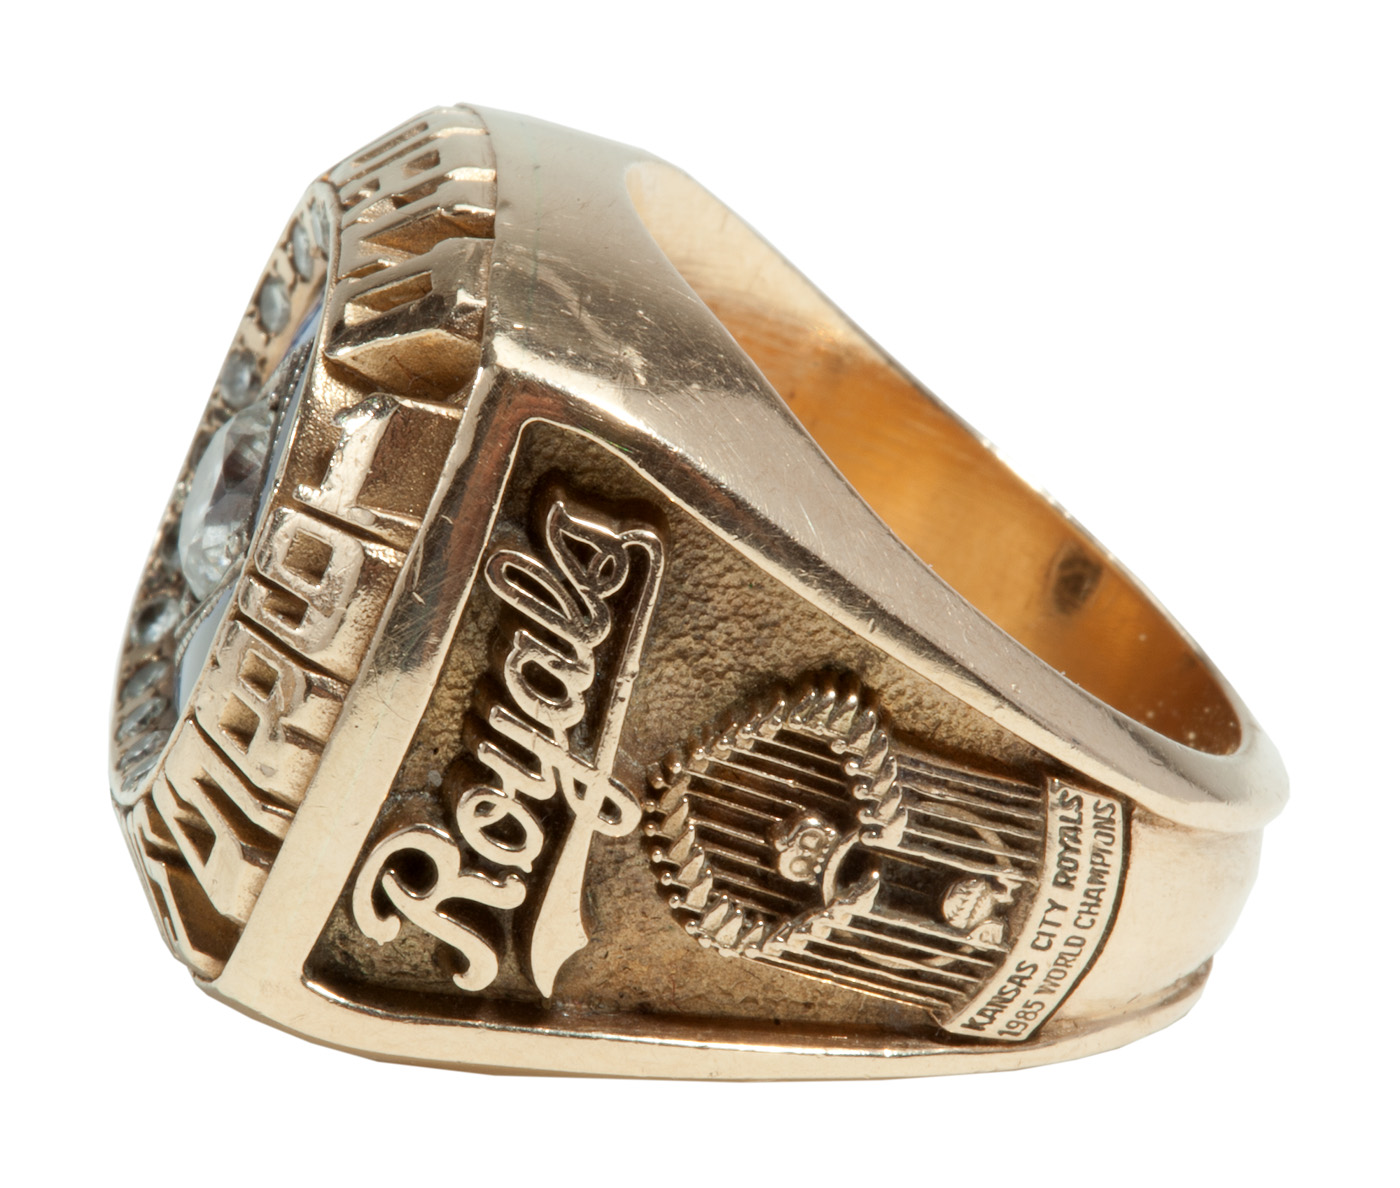 Take a look at the Royals' World Series championship rings